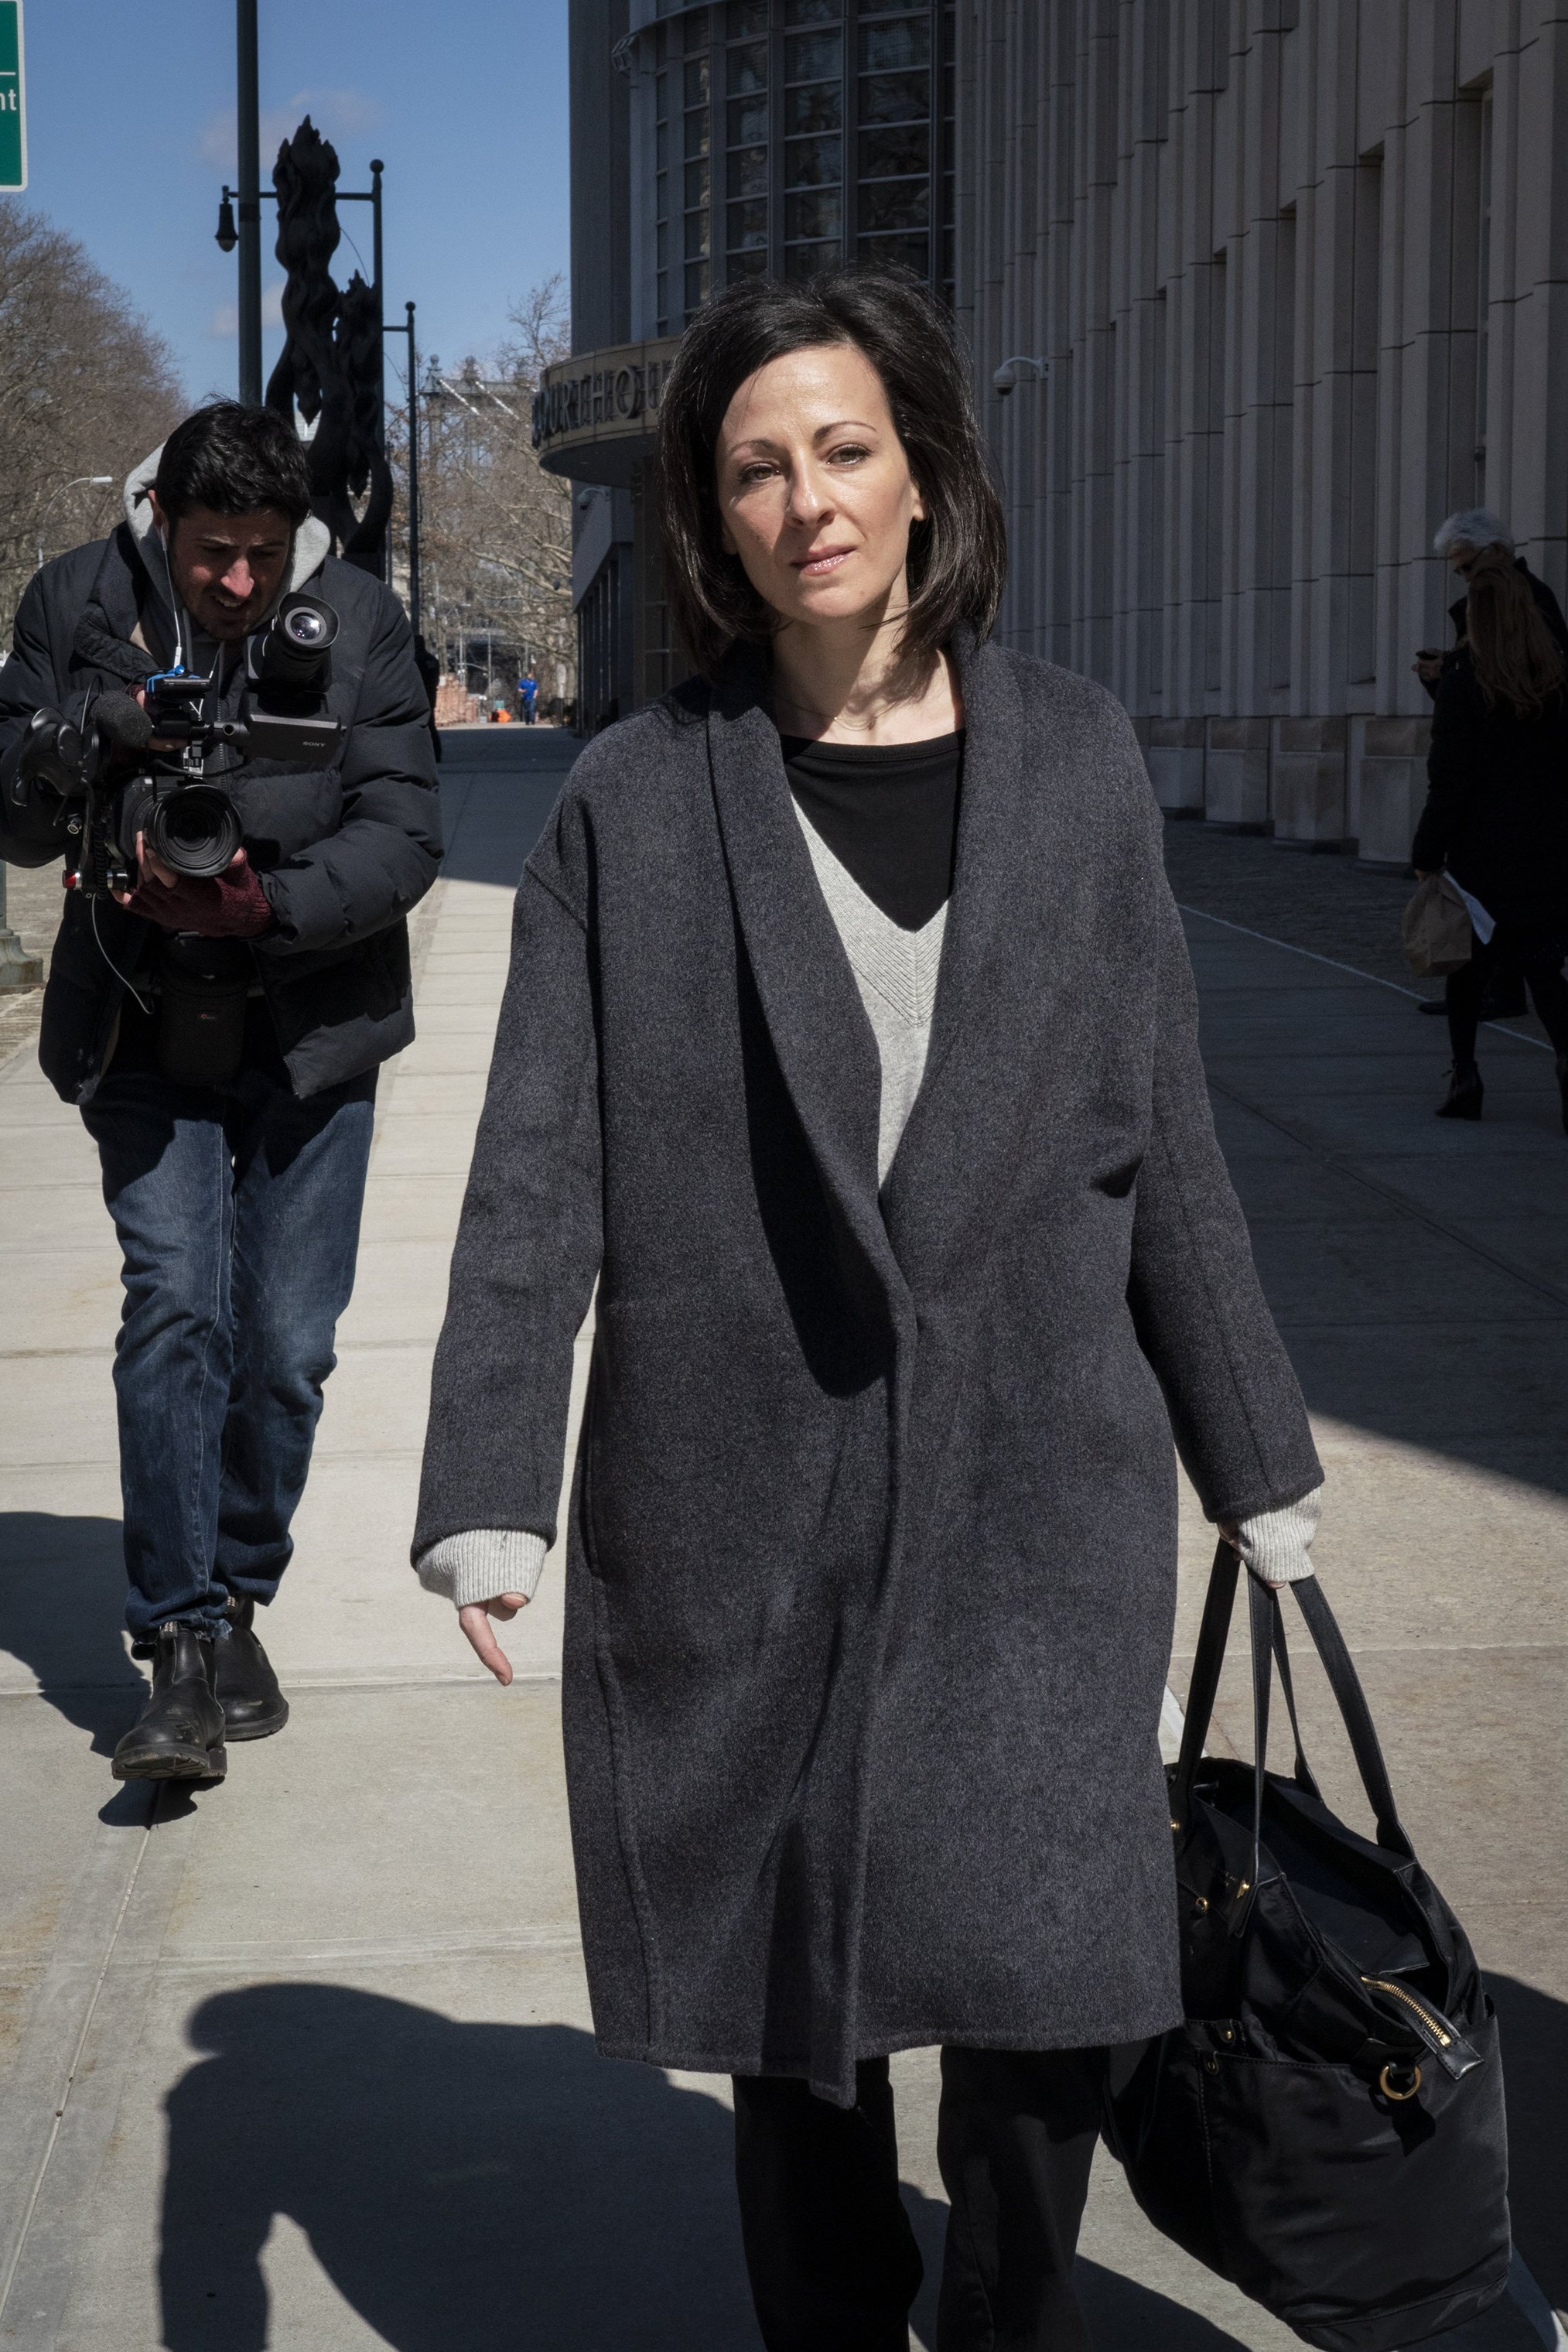 Lauren Salzman leaves the Federal Courthouse in Brooklyn on March 18, 2019. (Natan Dvir—Polaris)